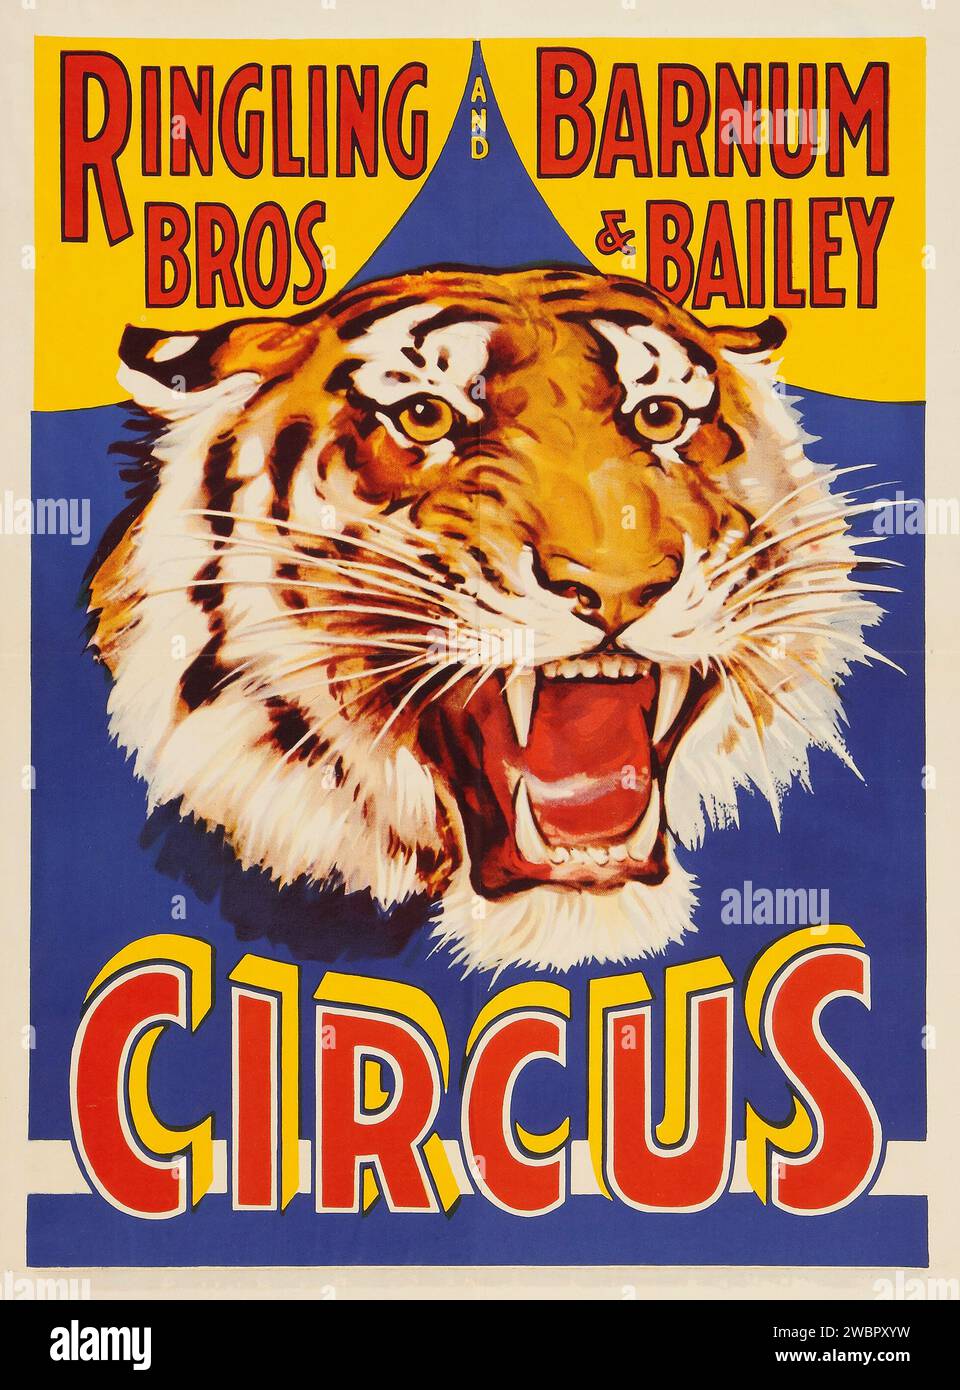 Circus Poster (Ringling Brothers et Barnum & Bailey, années 1930) avec un tigre rugissant Banque D'Images